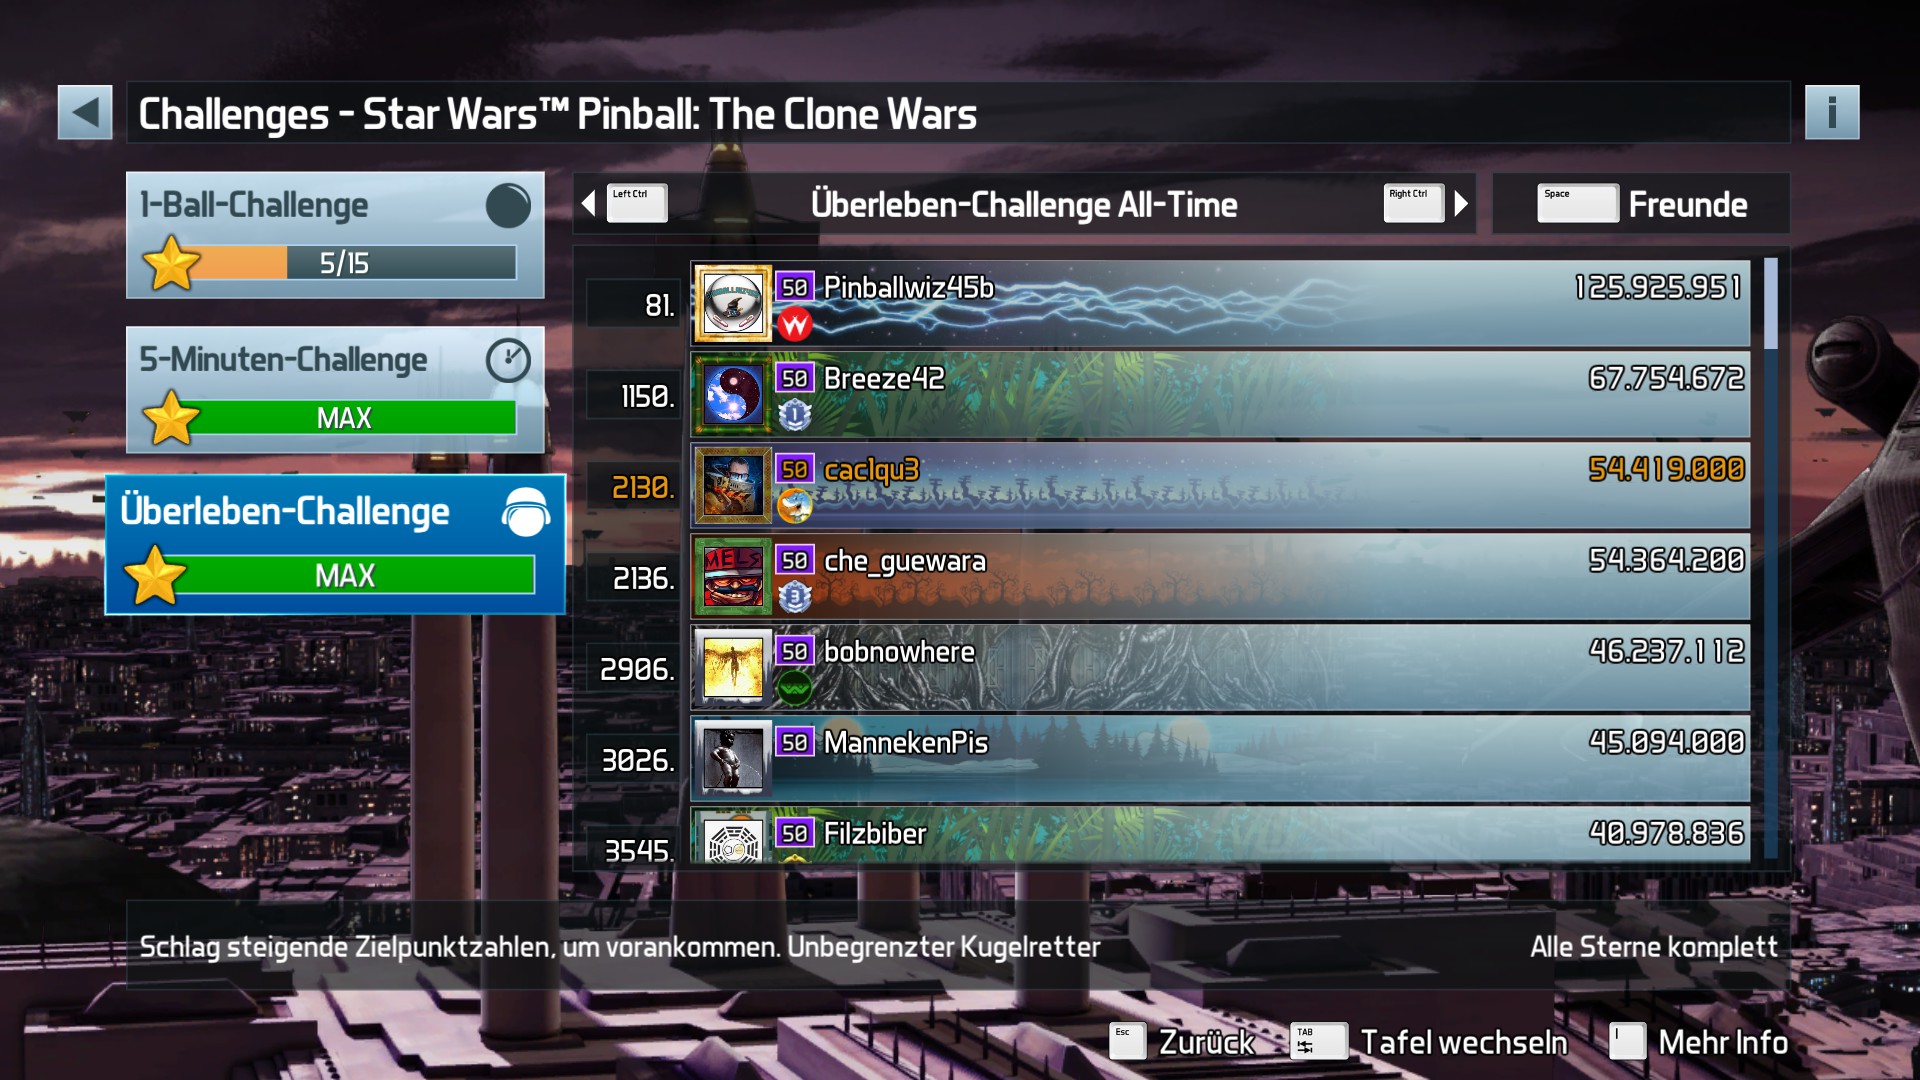 e2e4: Pinball FX3: Star Wars Pinball: The Clone Wars [Survivor] (PC) 54,419,000 points on 2022-06-22 16:15:38